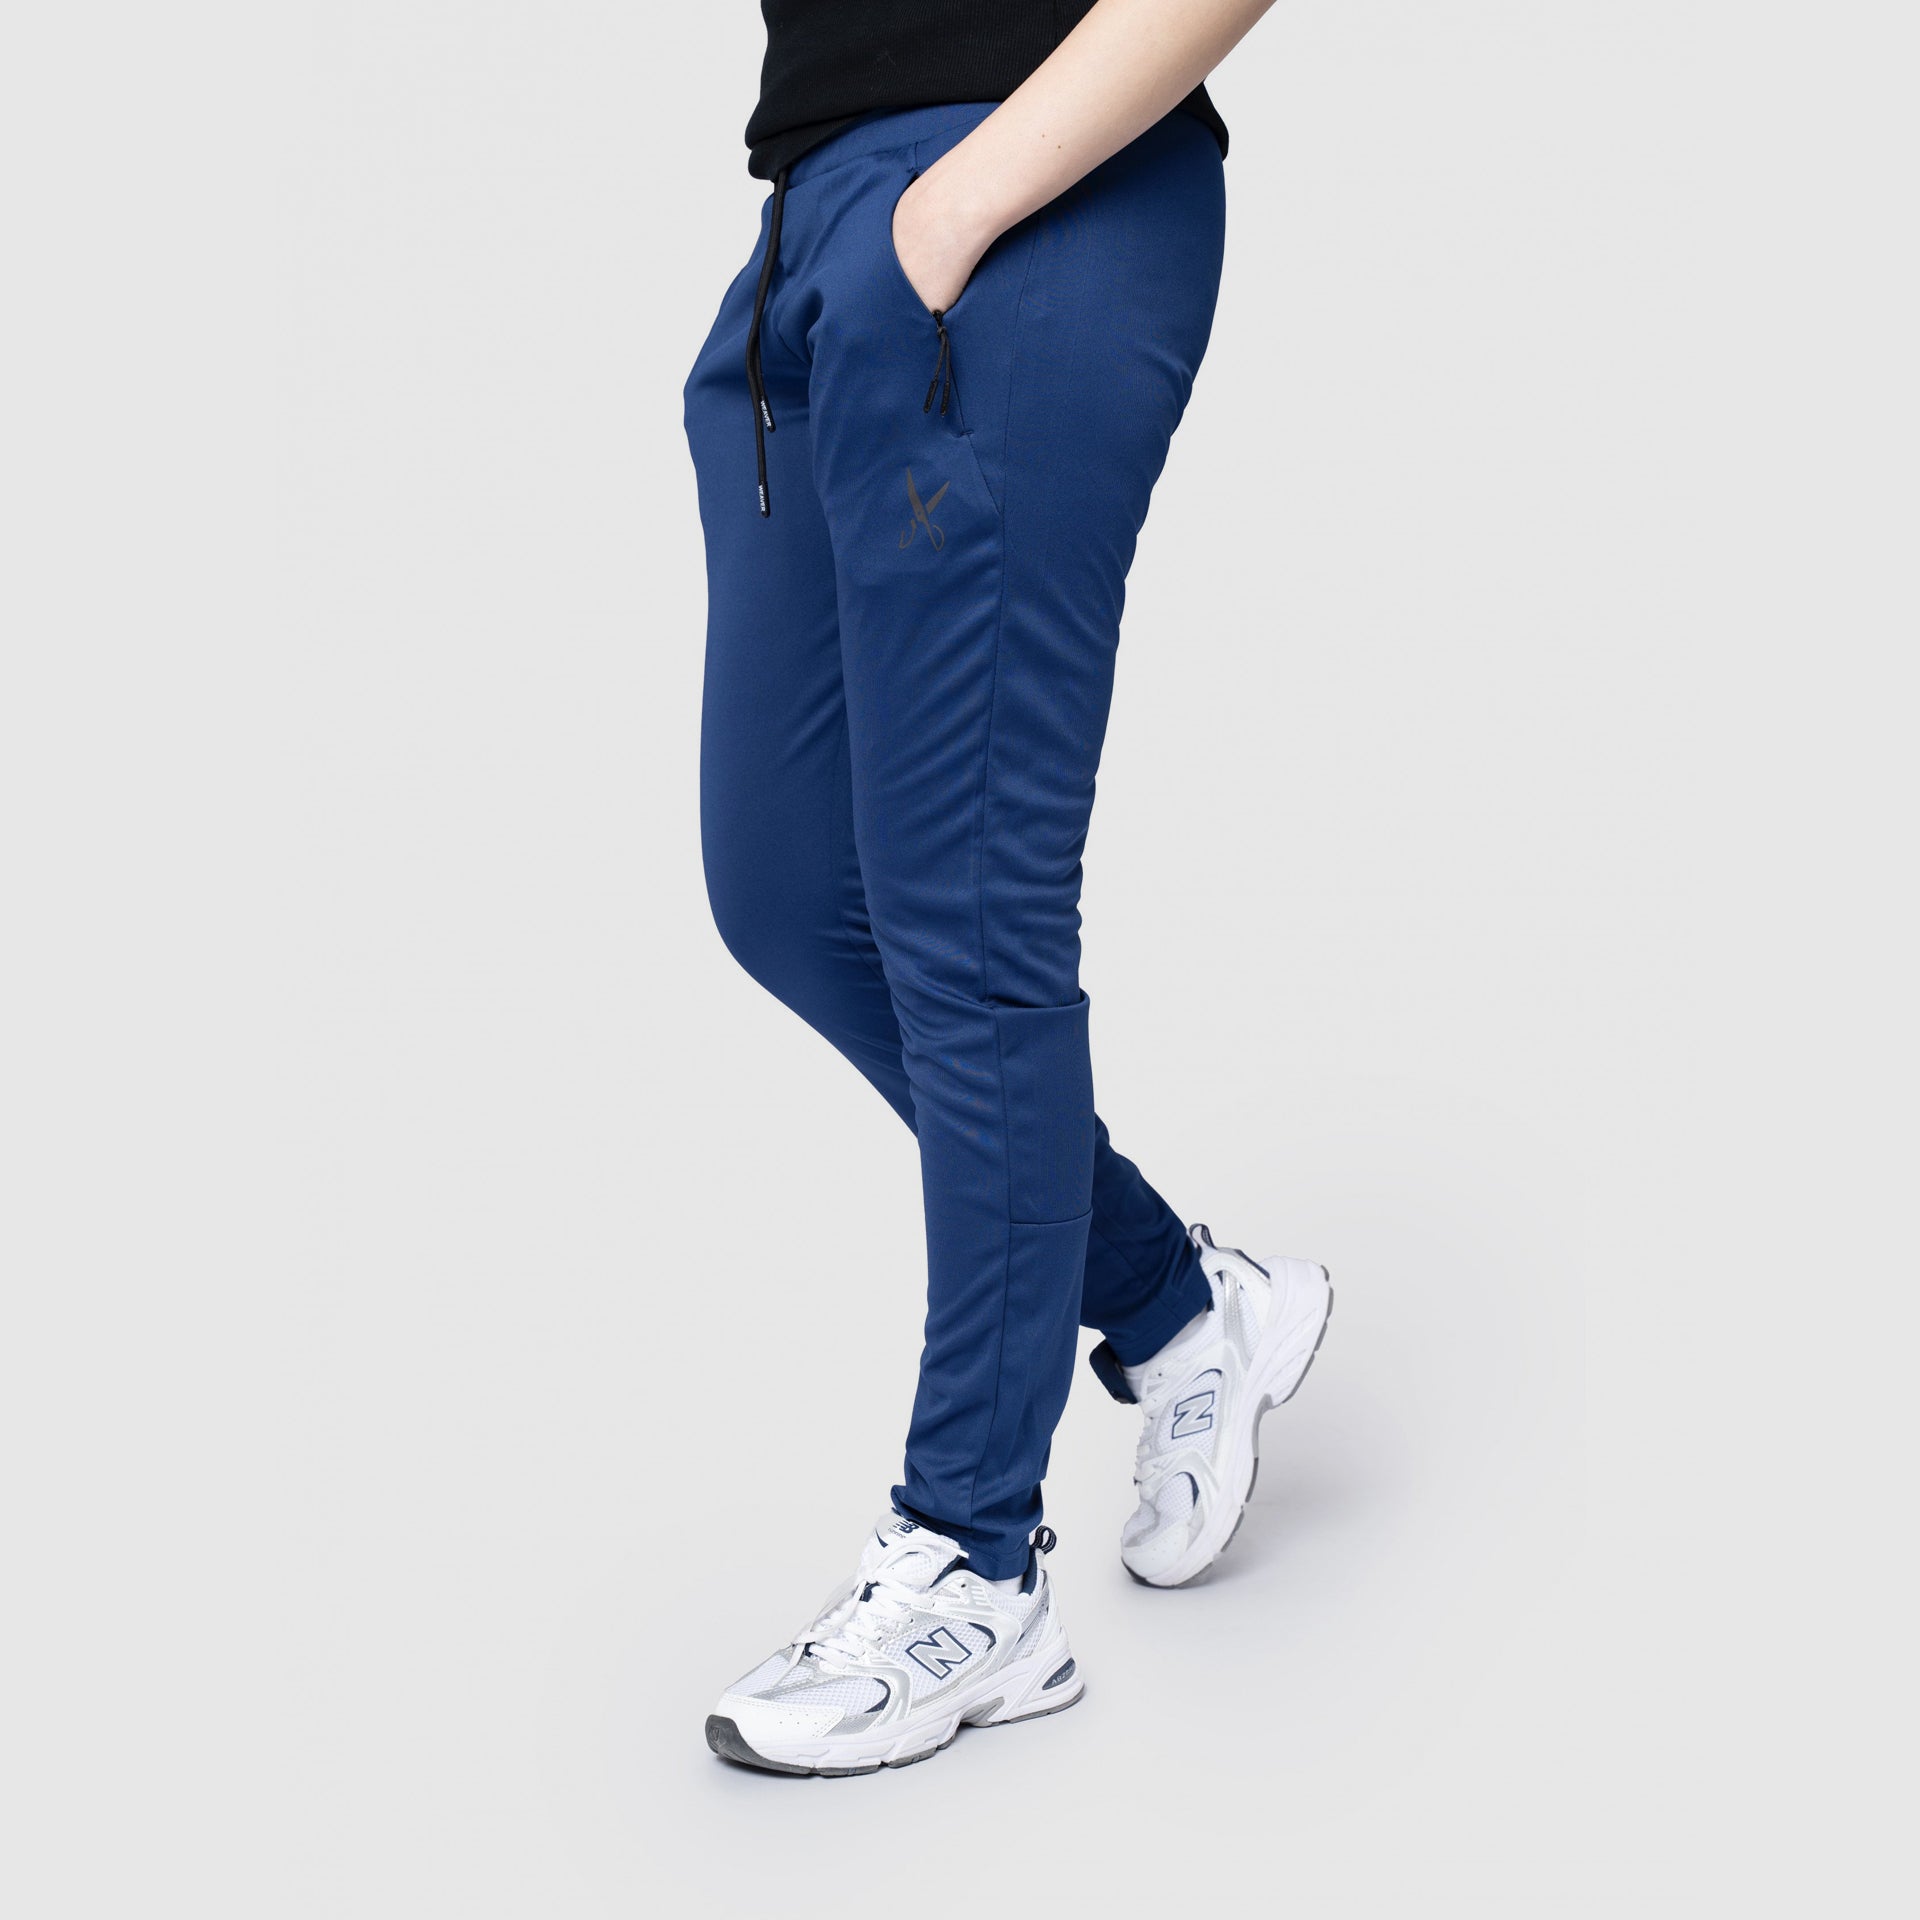 Blue Sweatpants From Weaver Design